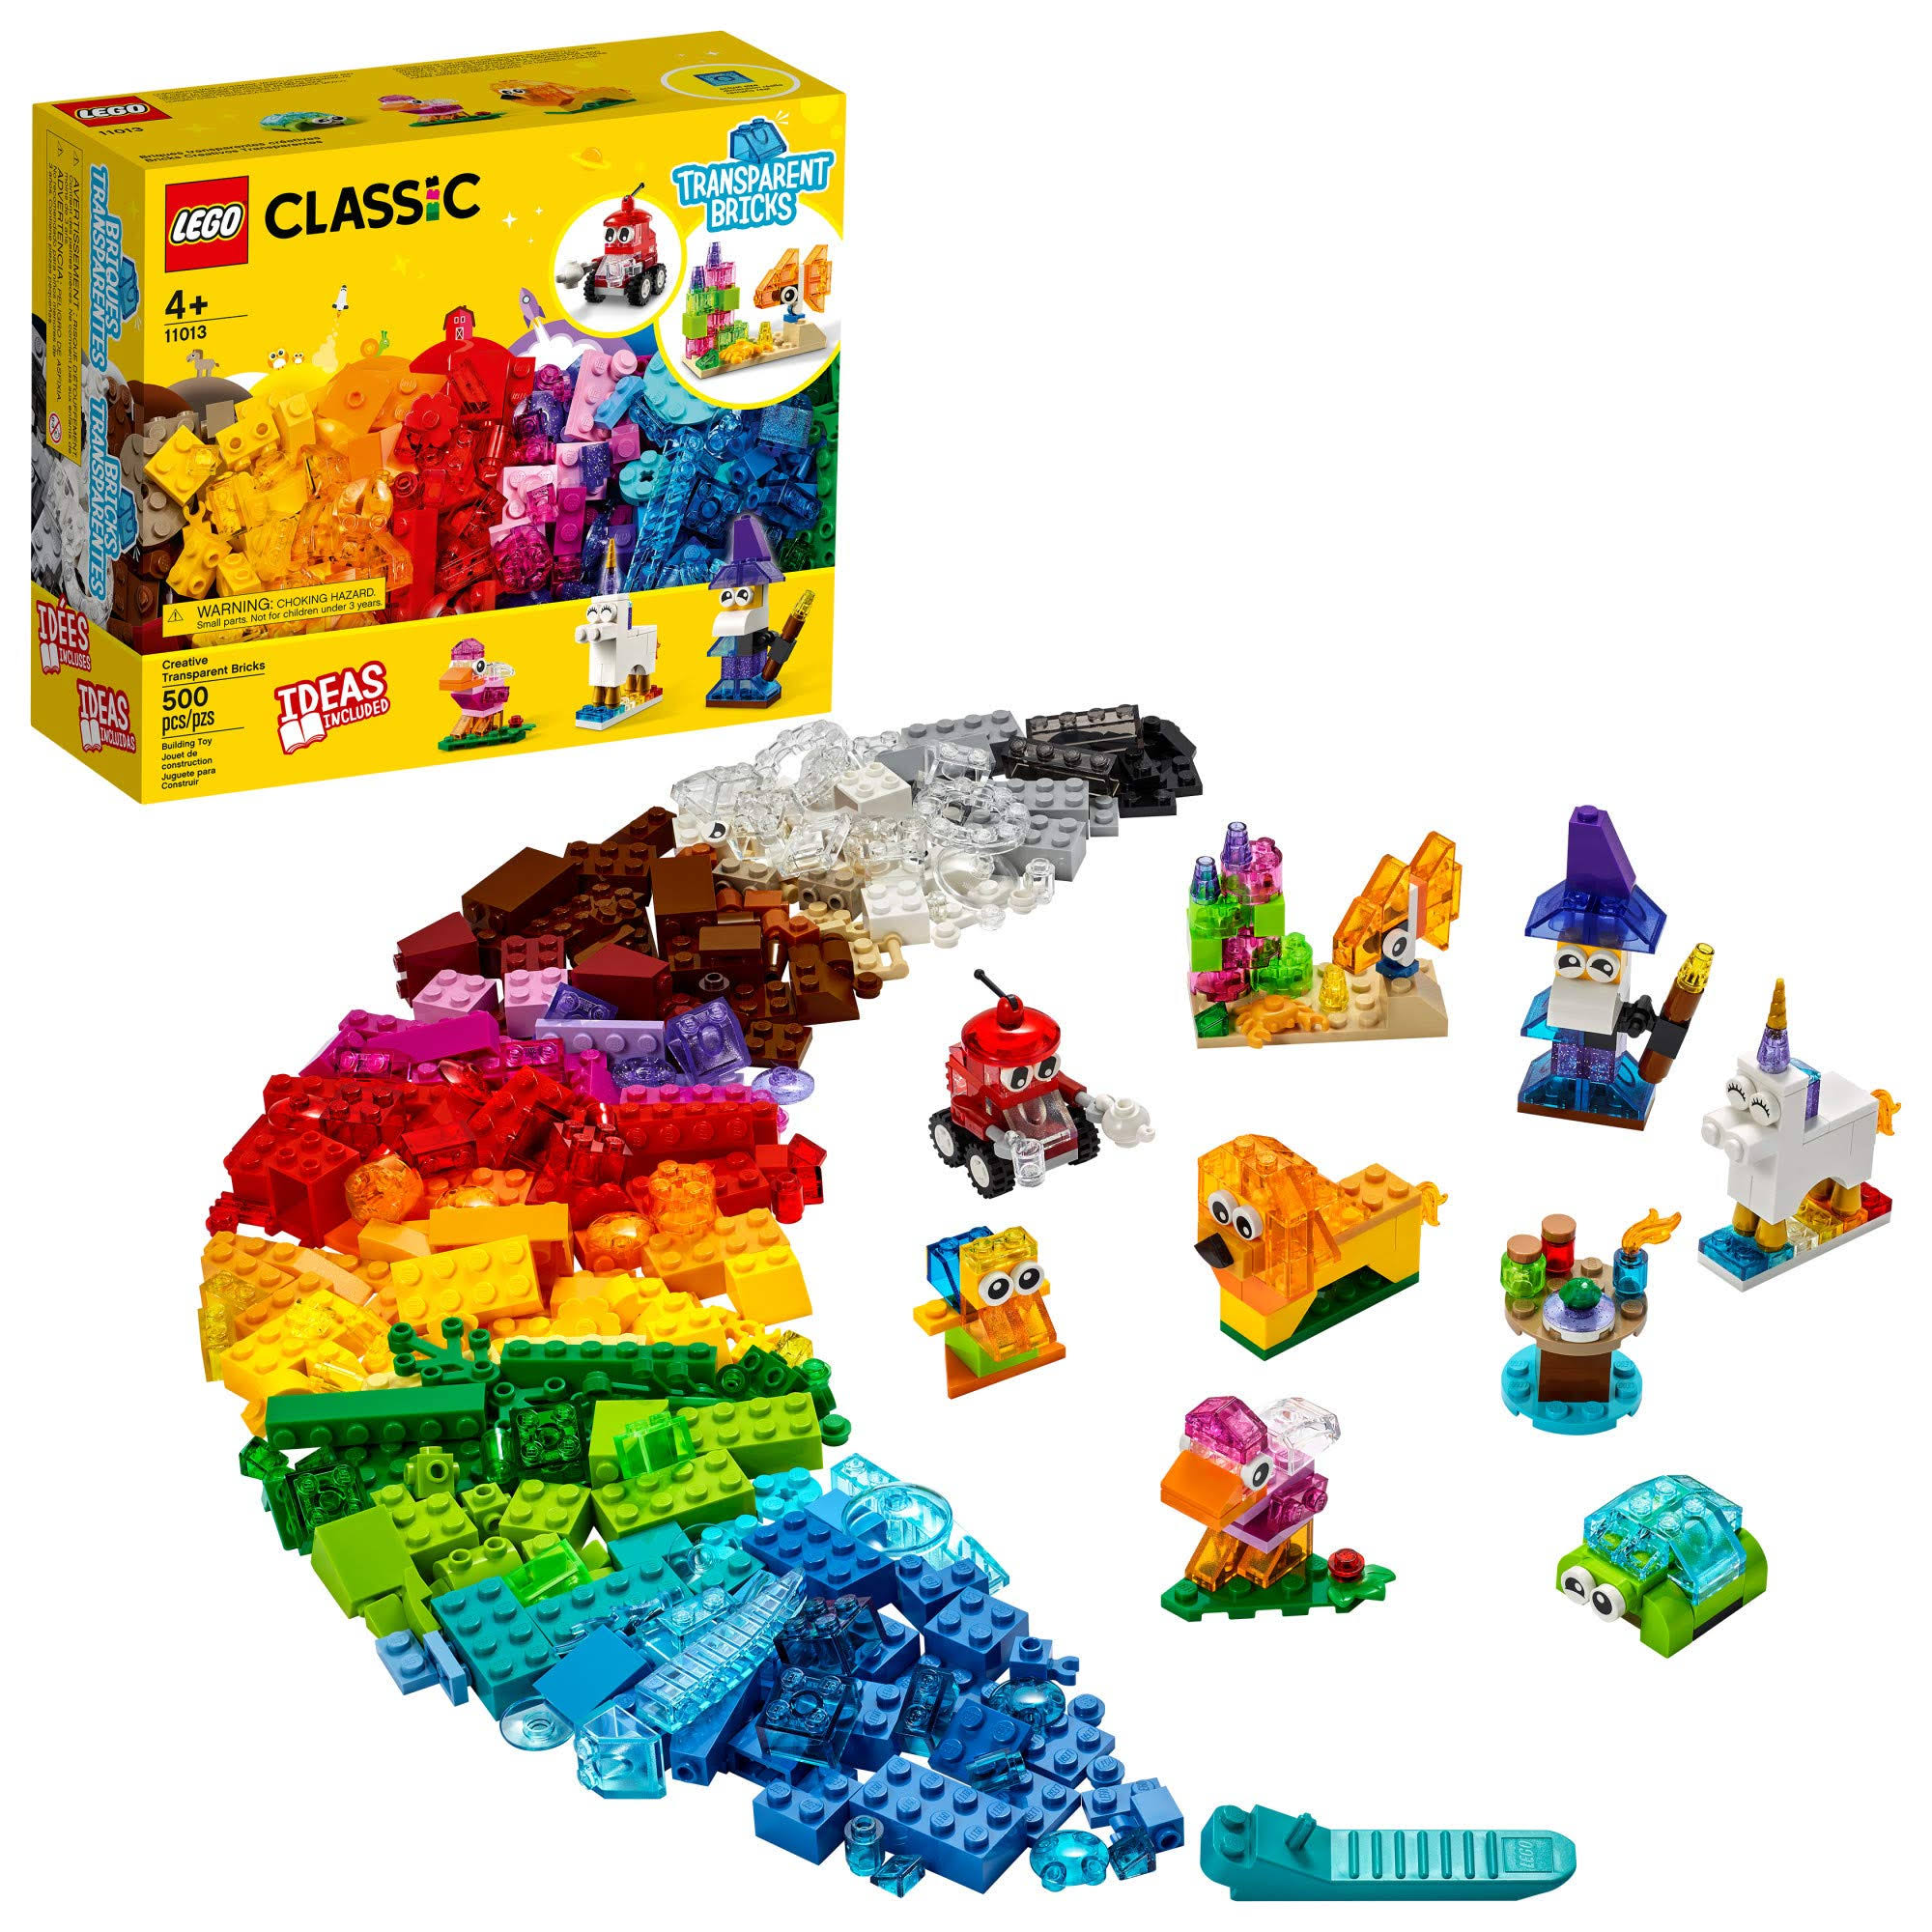 LEGO Classic Creative Transparent Bricks 11013 Building Kit with Multicolor